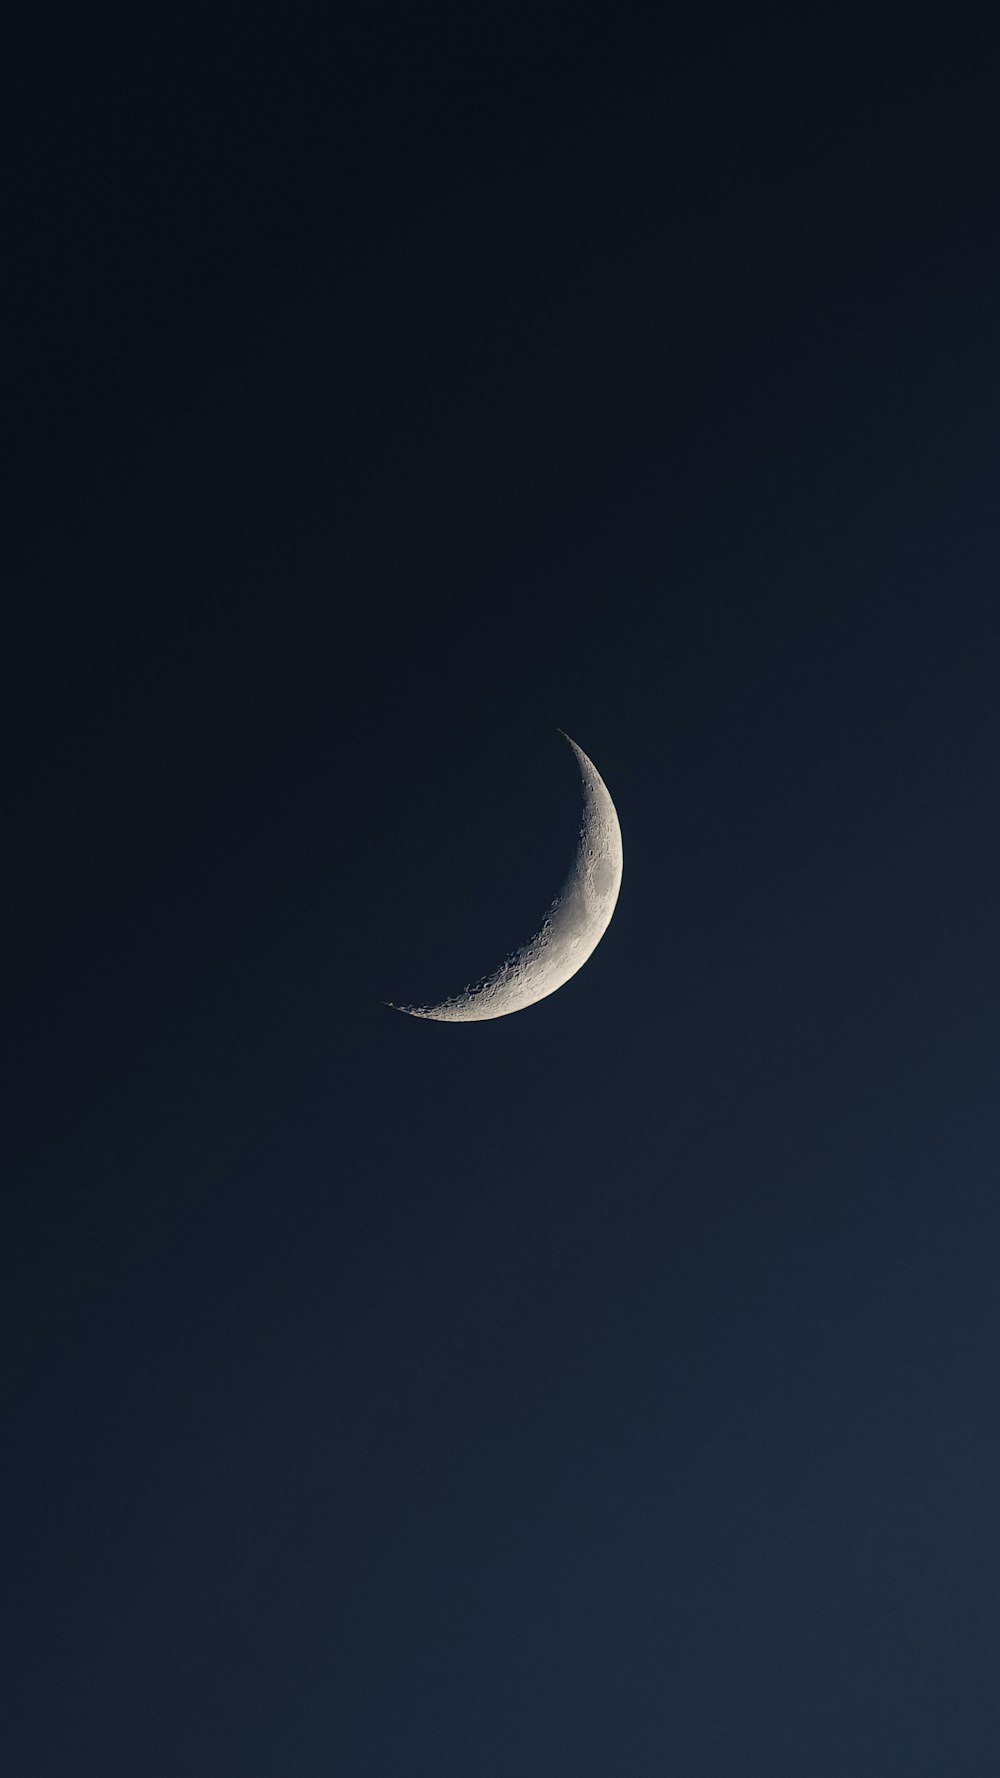 a crescent moon in a dark blue sky